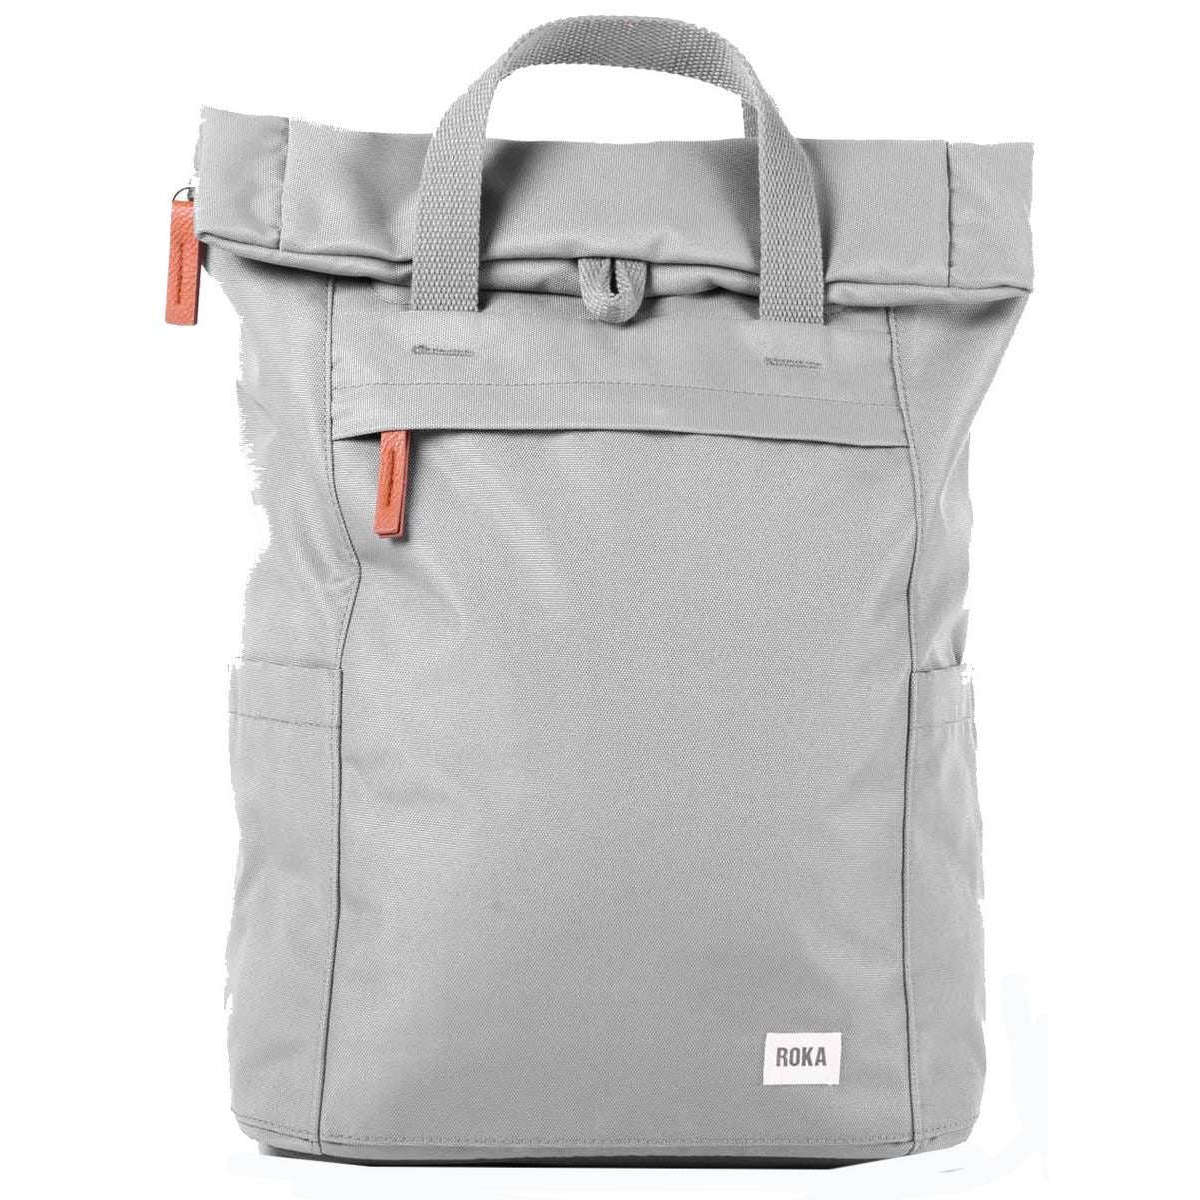 Roka Finchley A Medium Sustainable Canvas Backpack - Stormy Grey